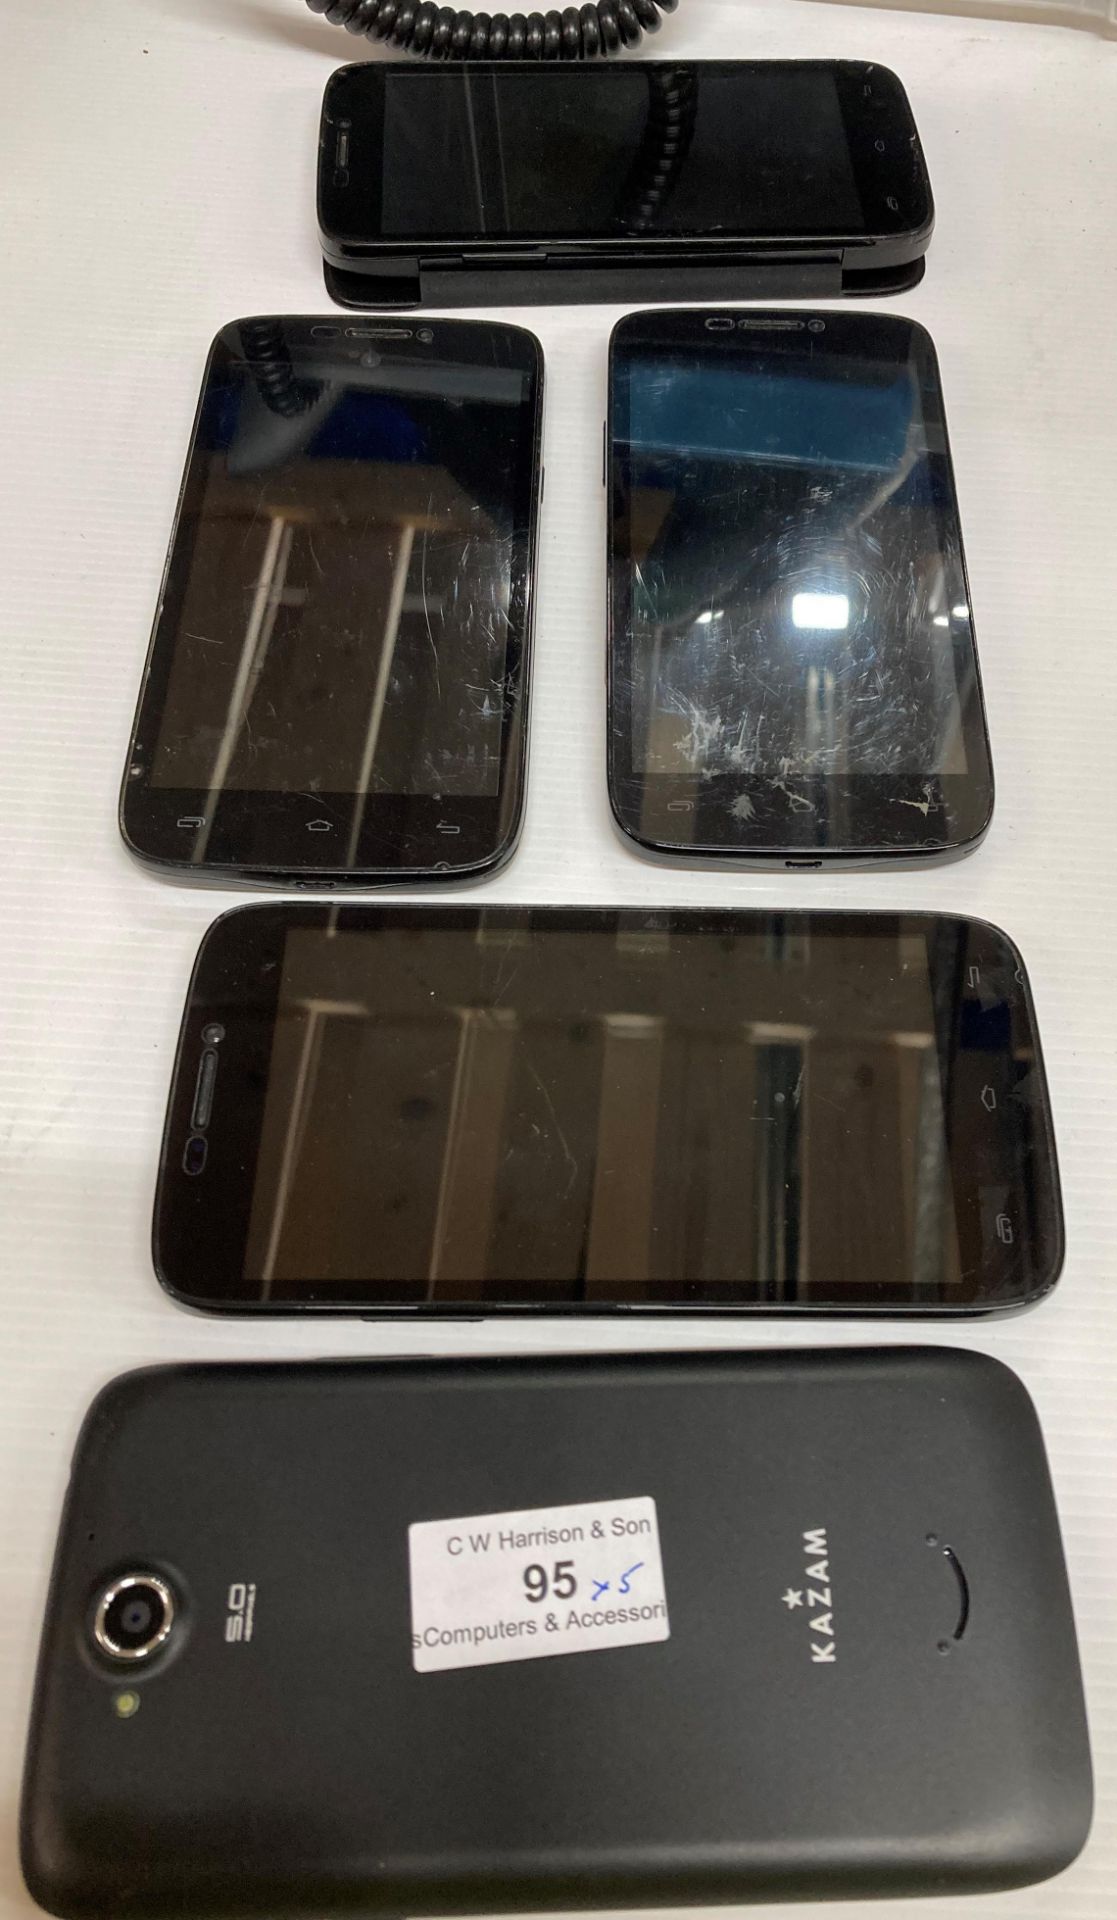 5 x Kazam 5MP Mobile Phones no chargers (Saleroom location: G11)